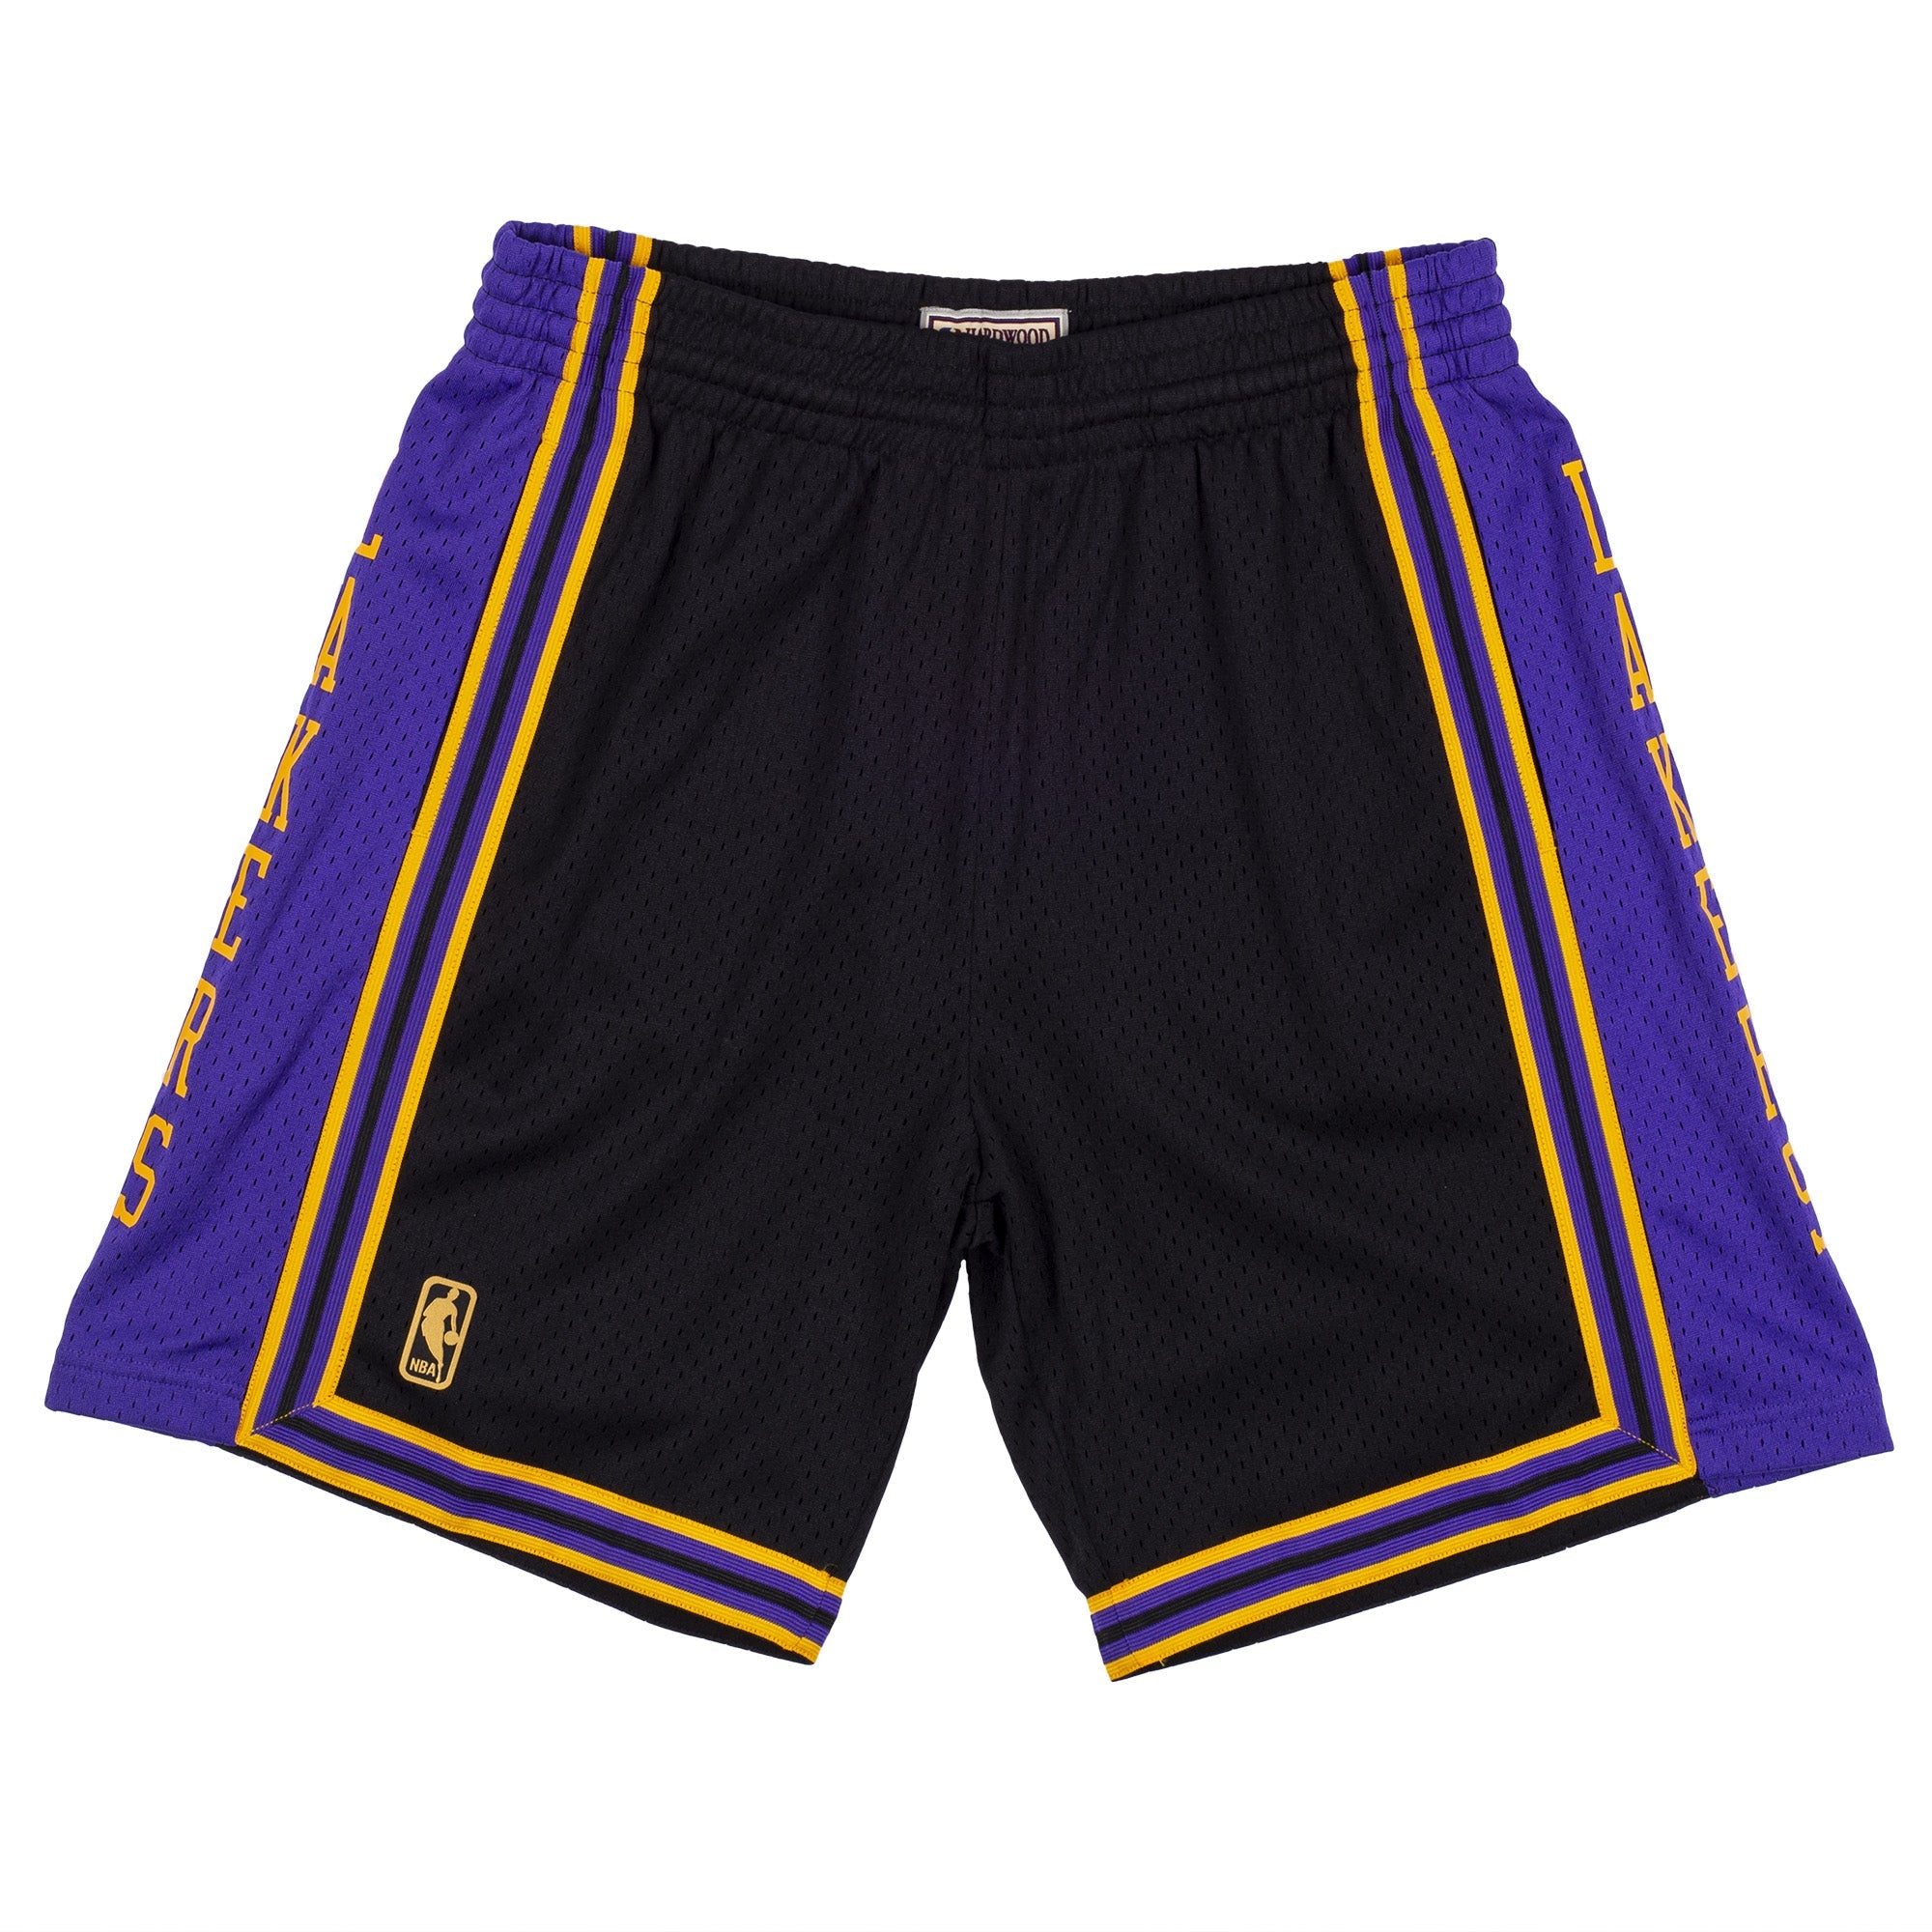 Los Angeles Lakers 1995 Rookie Green Shorts - Basketball Shorts